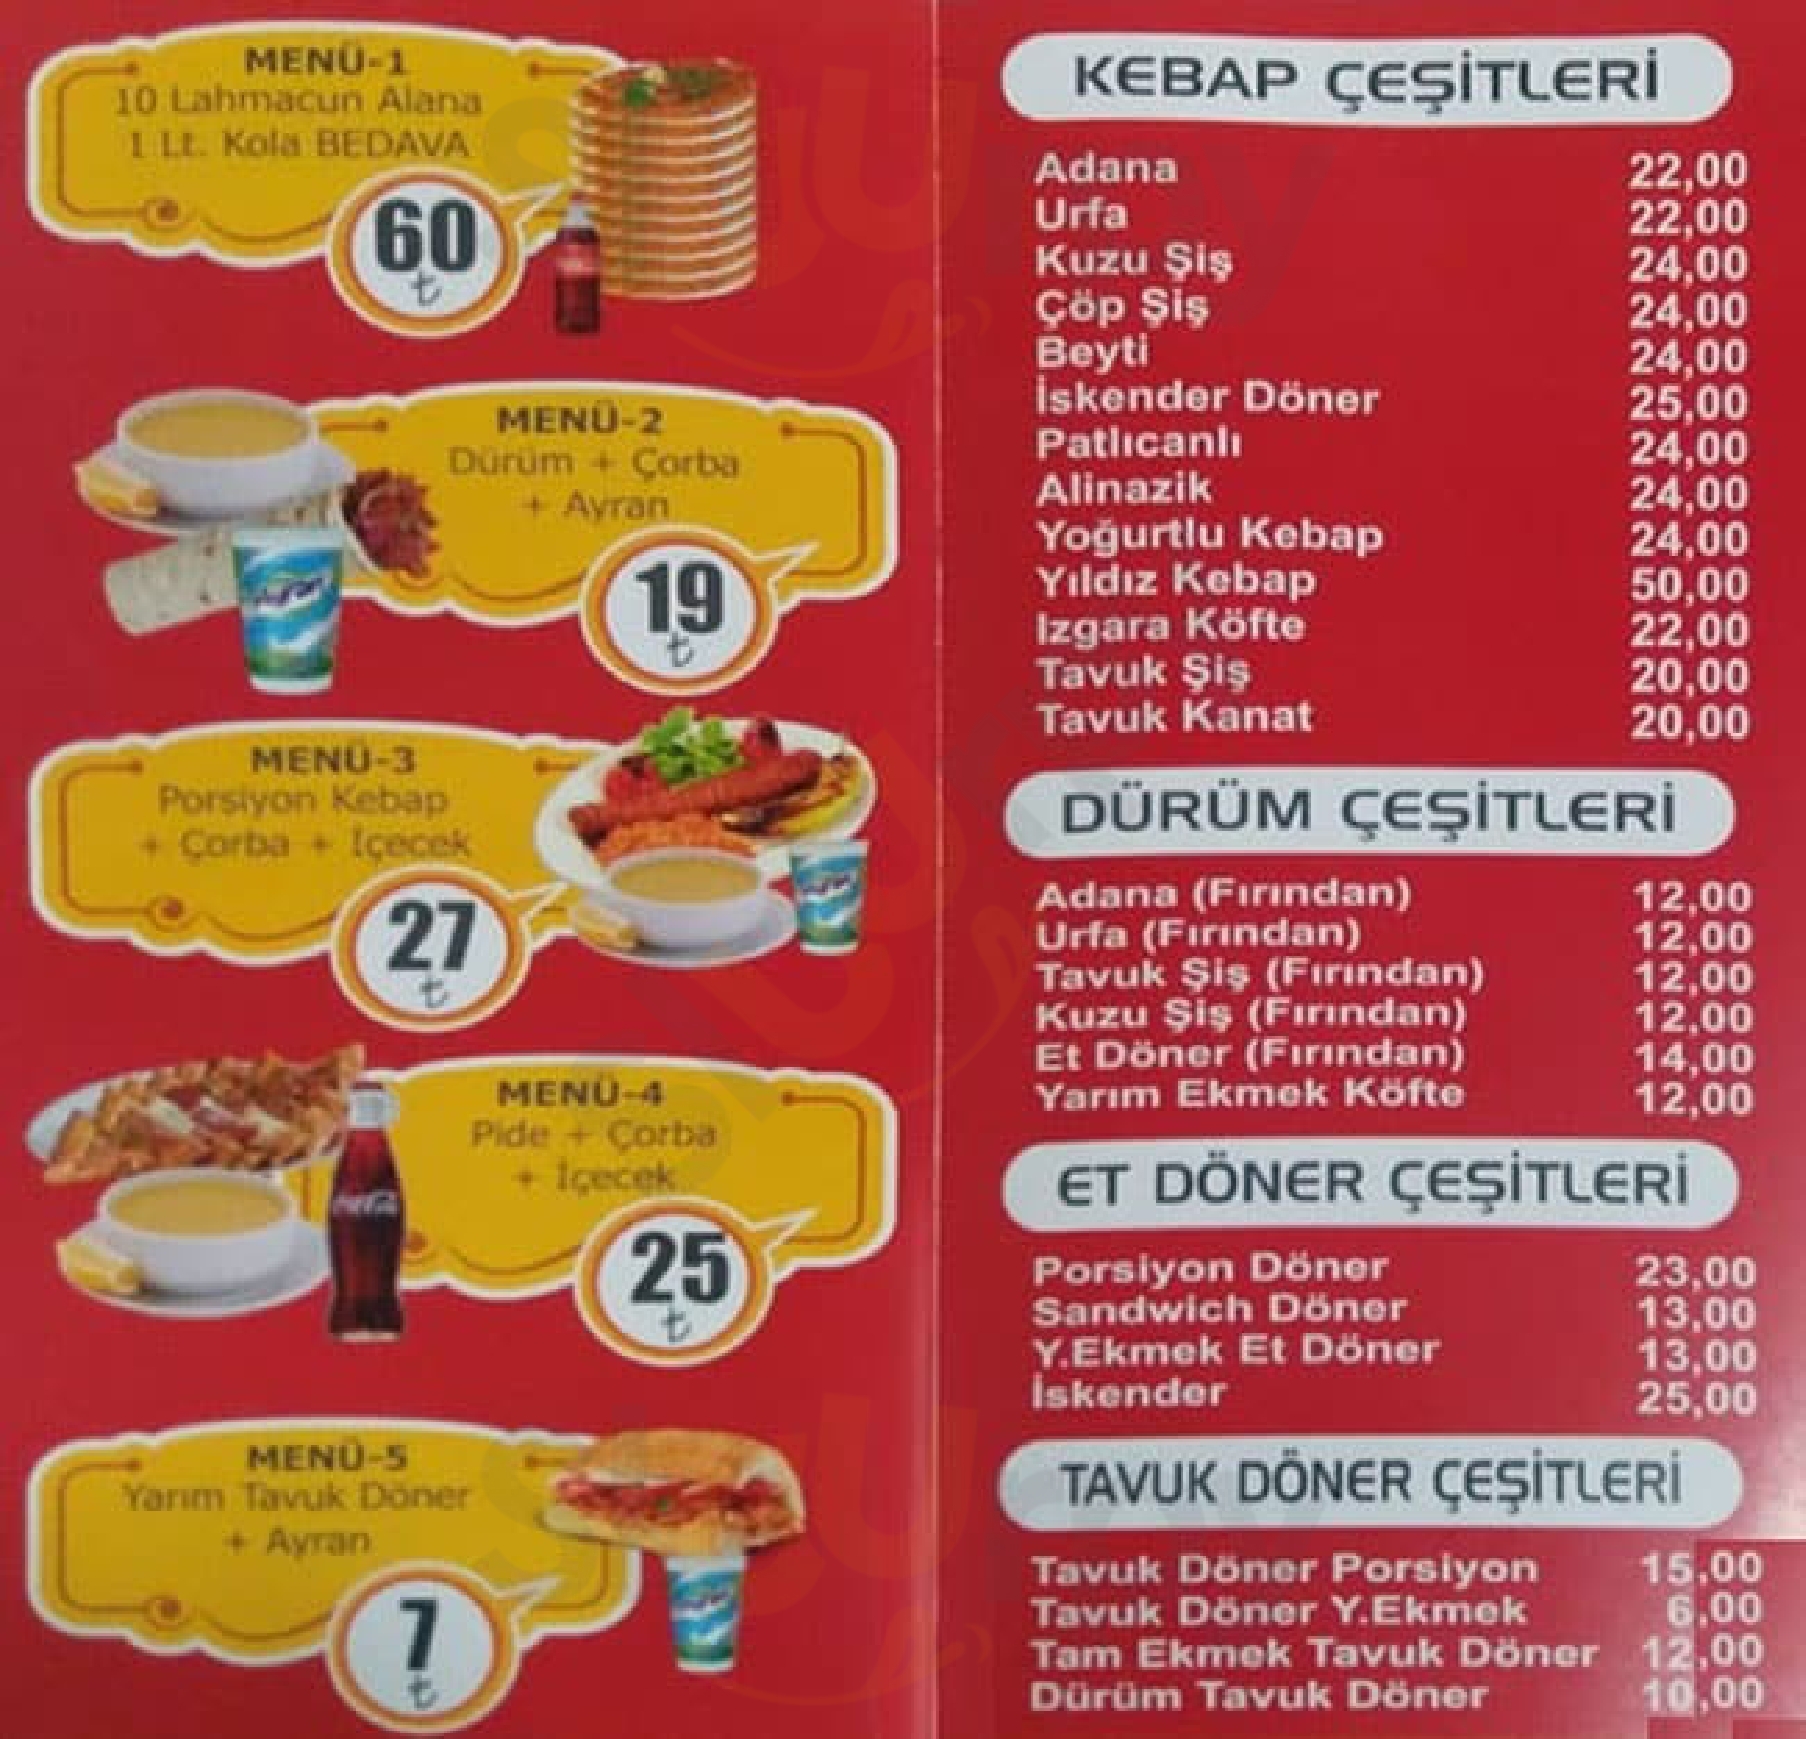 Yildiz Kebap Salonu İstanbul Menu - 1